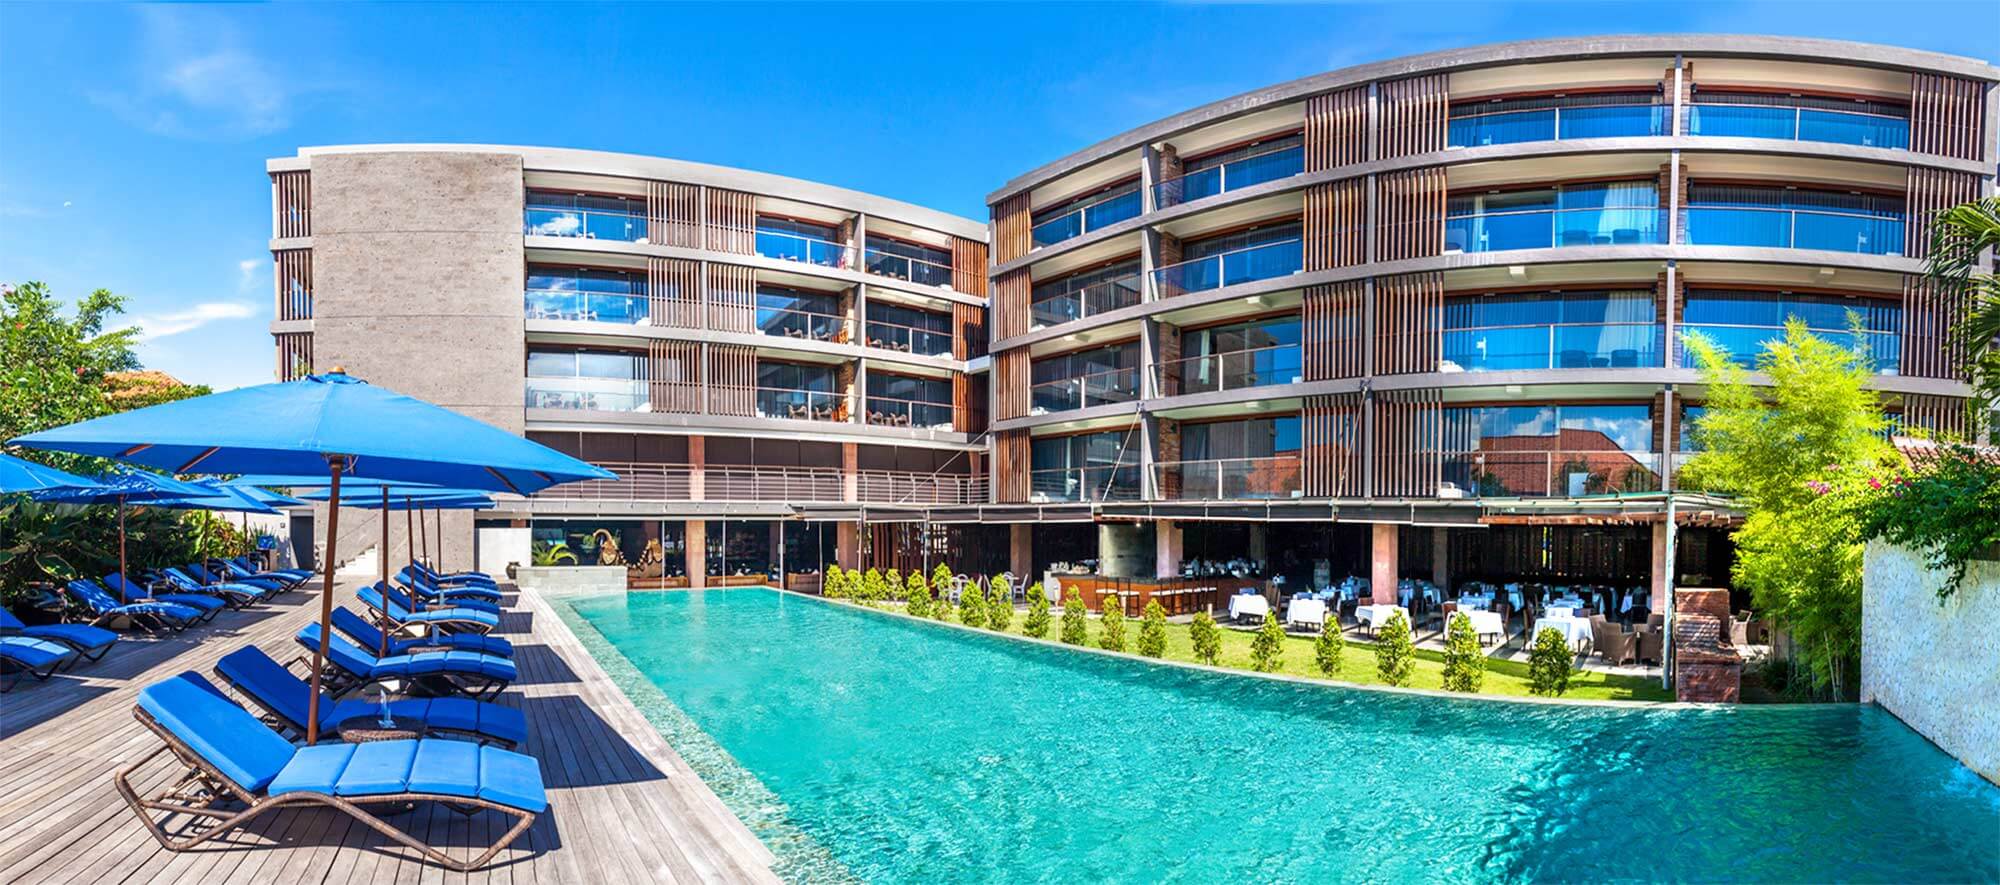 https://neverneverlandinbali.com/wp-content/uploads/2018/05/Watermark_Hotel_Spa_Bali_Jimbaran.jpg